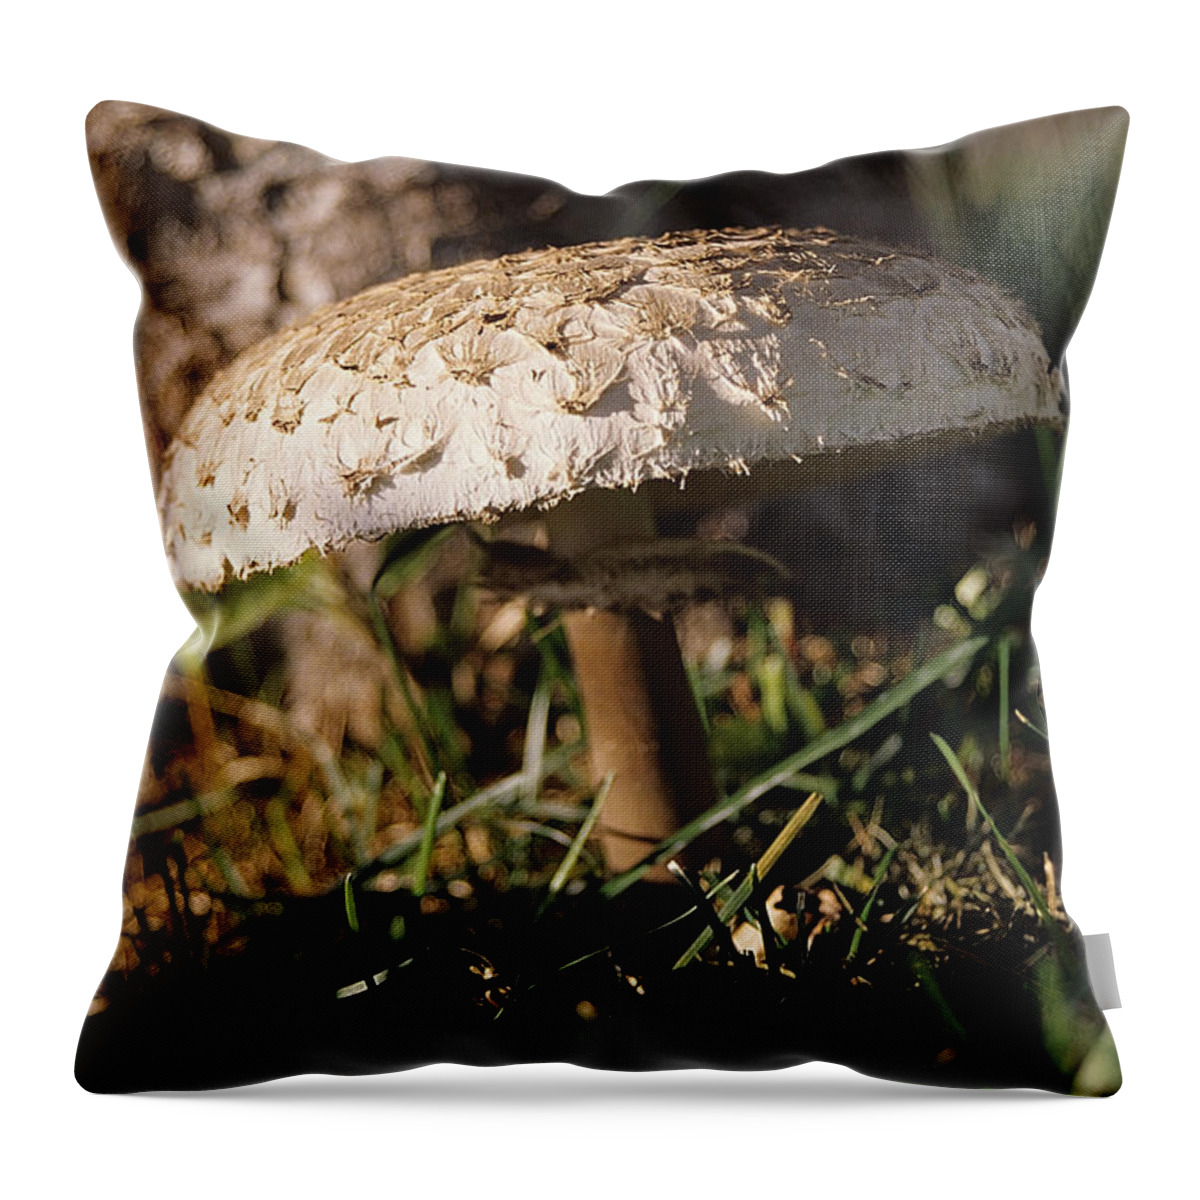 Mushroom Throw Pillow featuring the photograph Mushroom I by Sharon Elliott